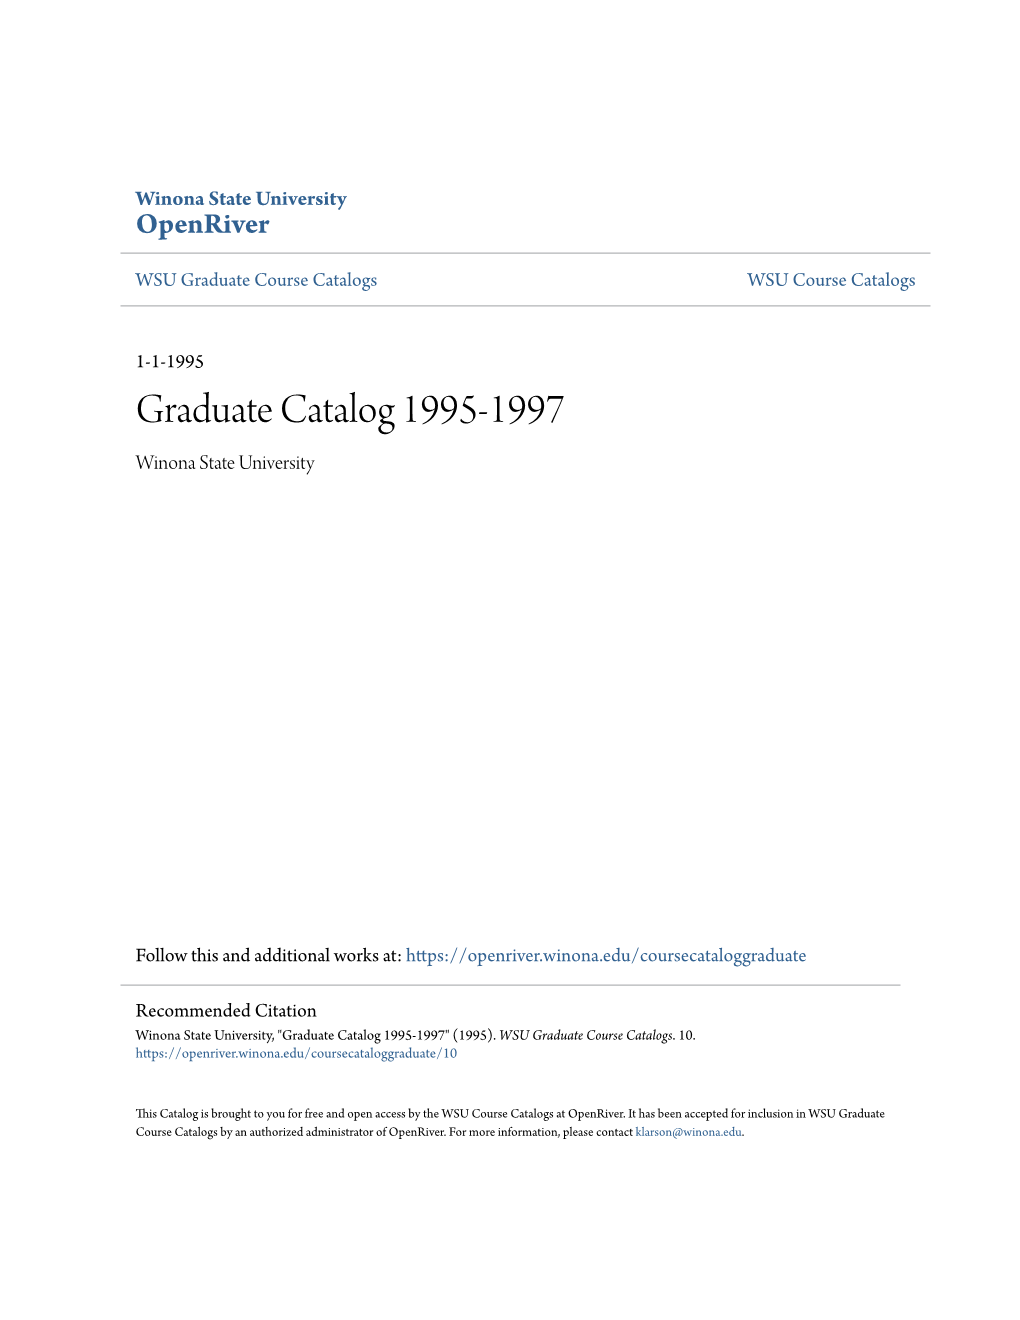 Graduate Catalog 1995-1997 Winona State University